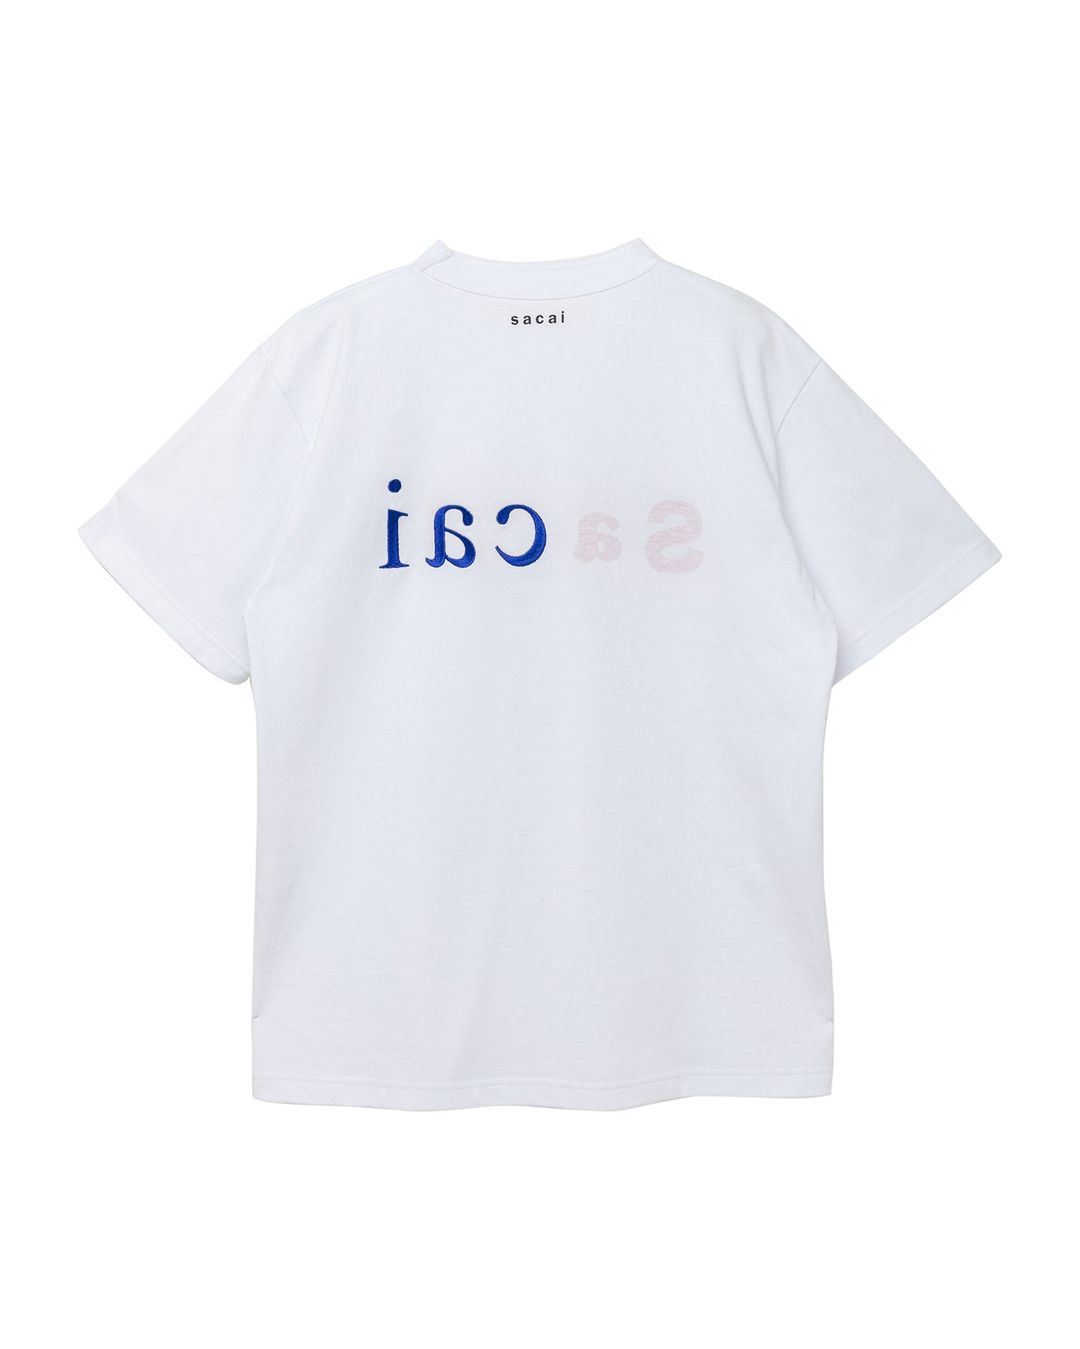 sacai Aoyama Exclusive T-Shirtにてリニューアルオープン記念限定TEEが4/22 発売 (サカイ青山)